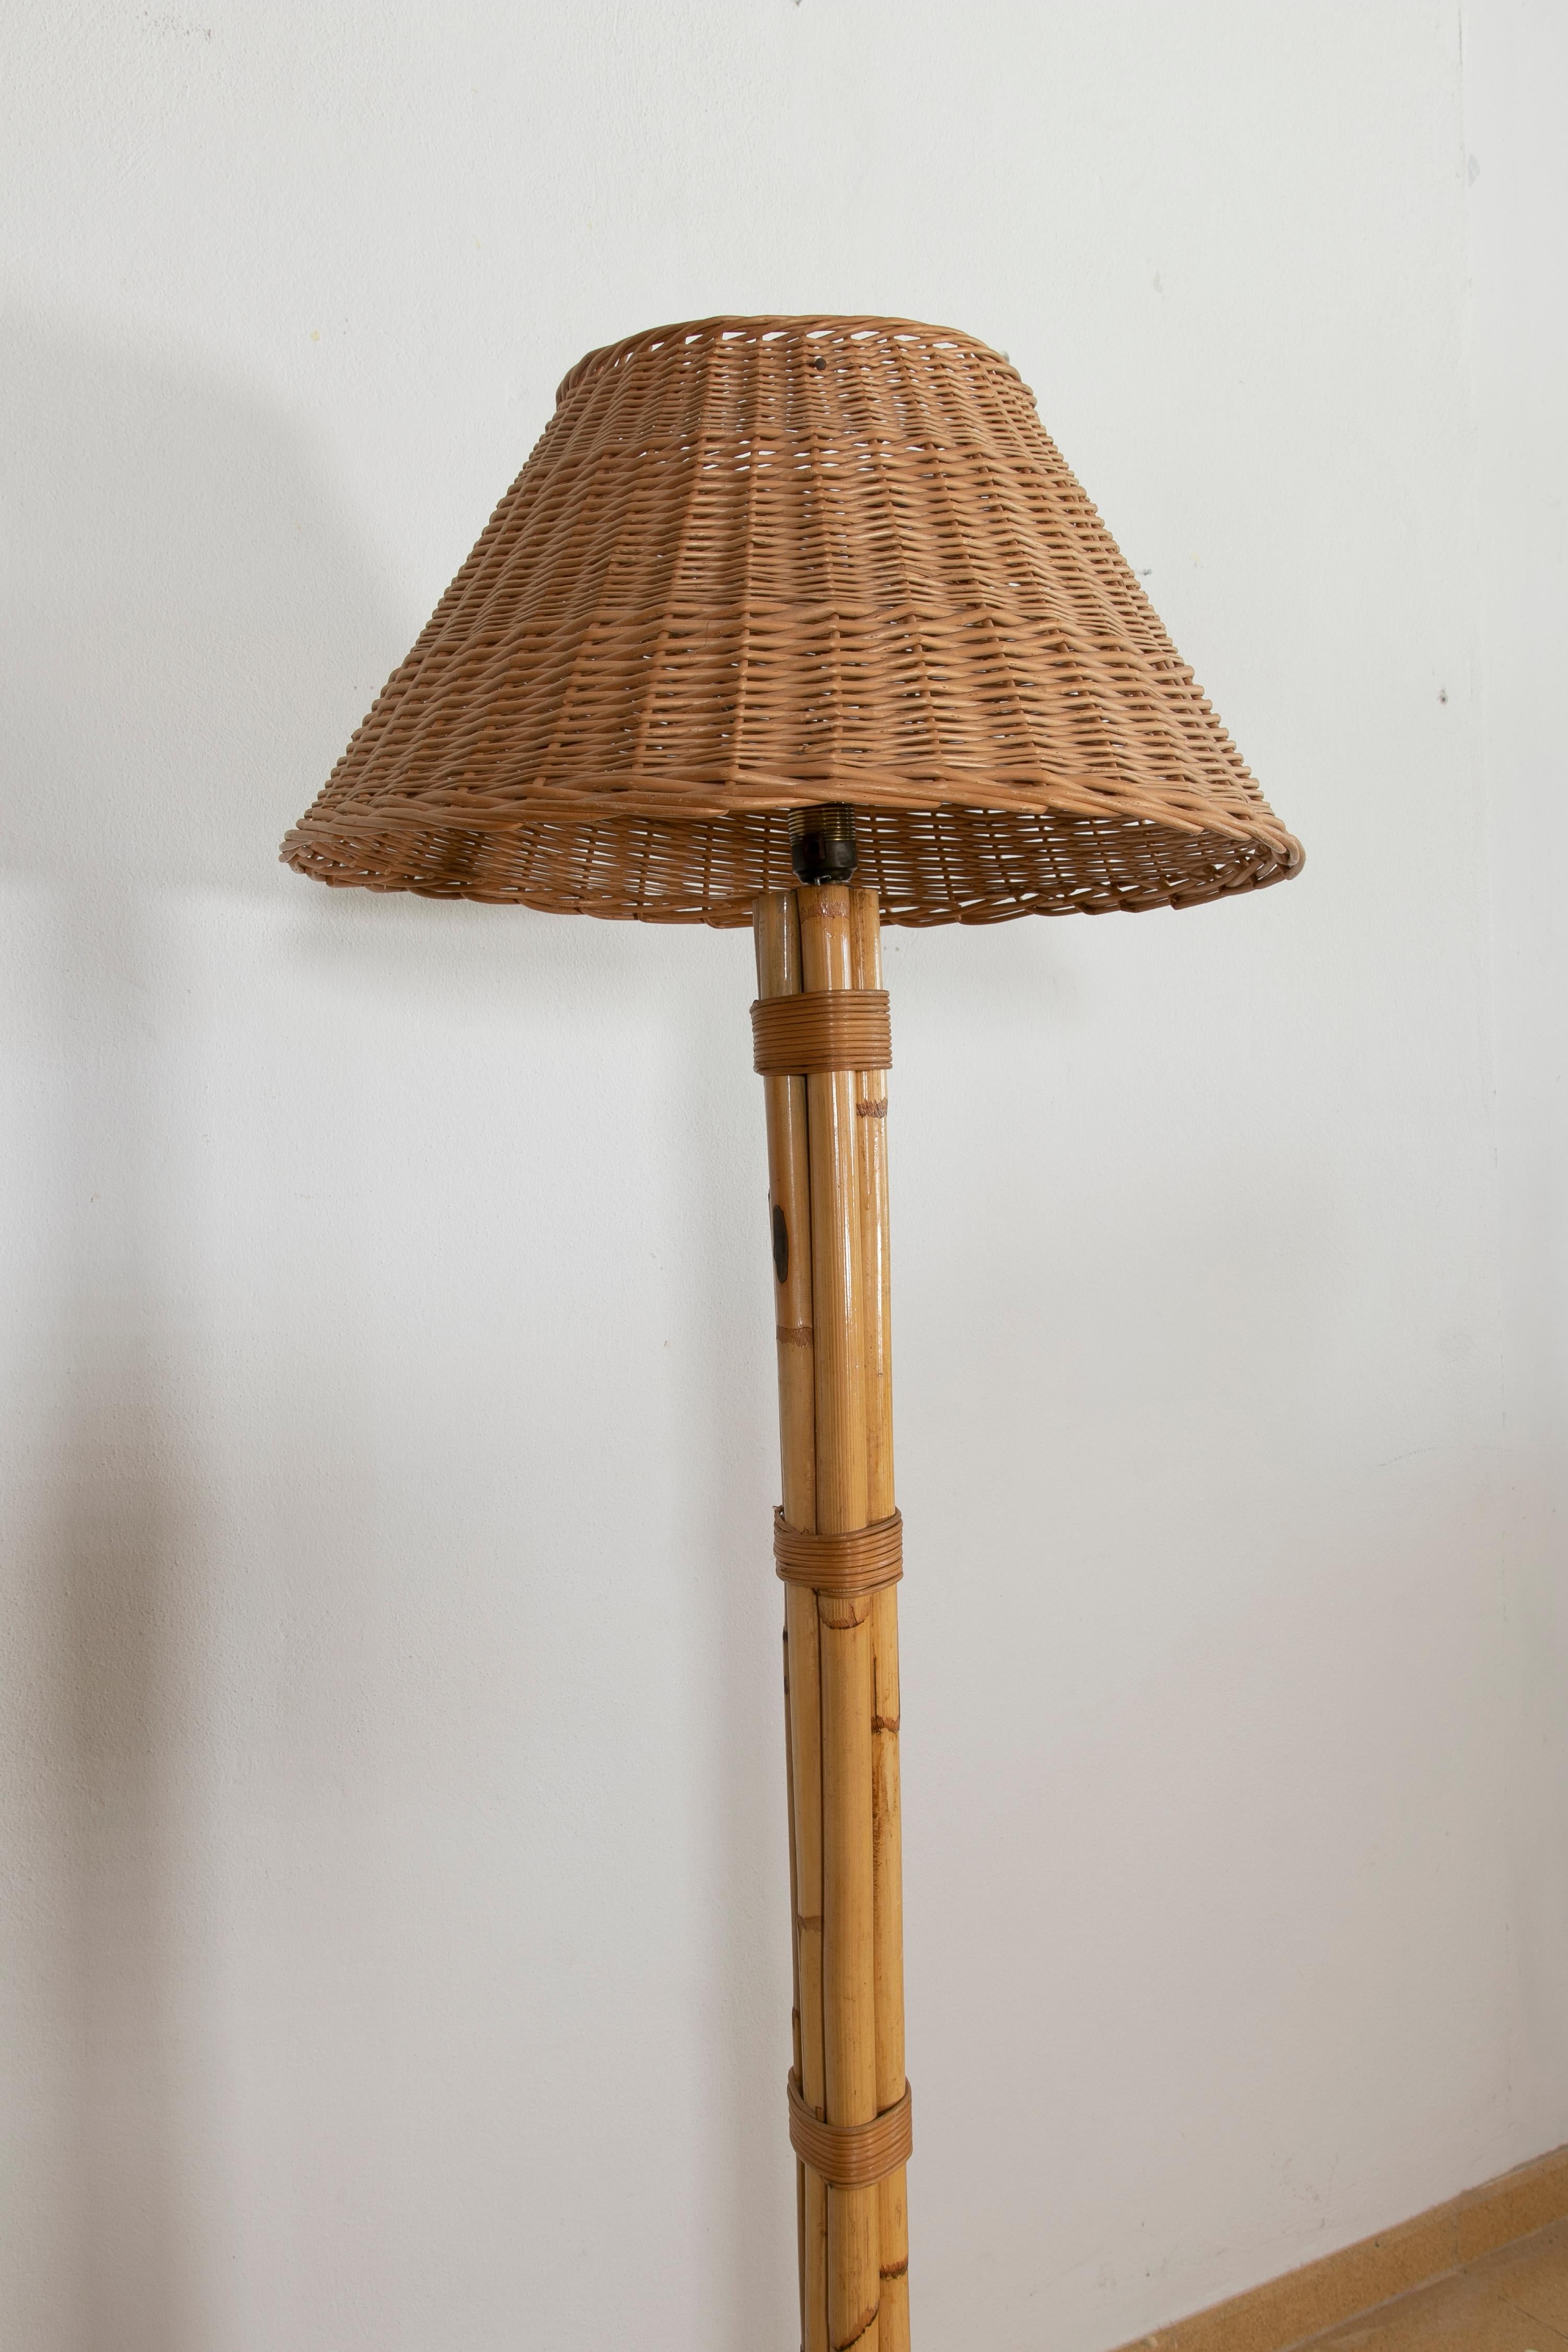 1970s, Spanish bamboo floor lamp with wicker lampshade.